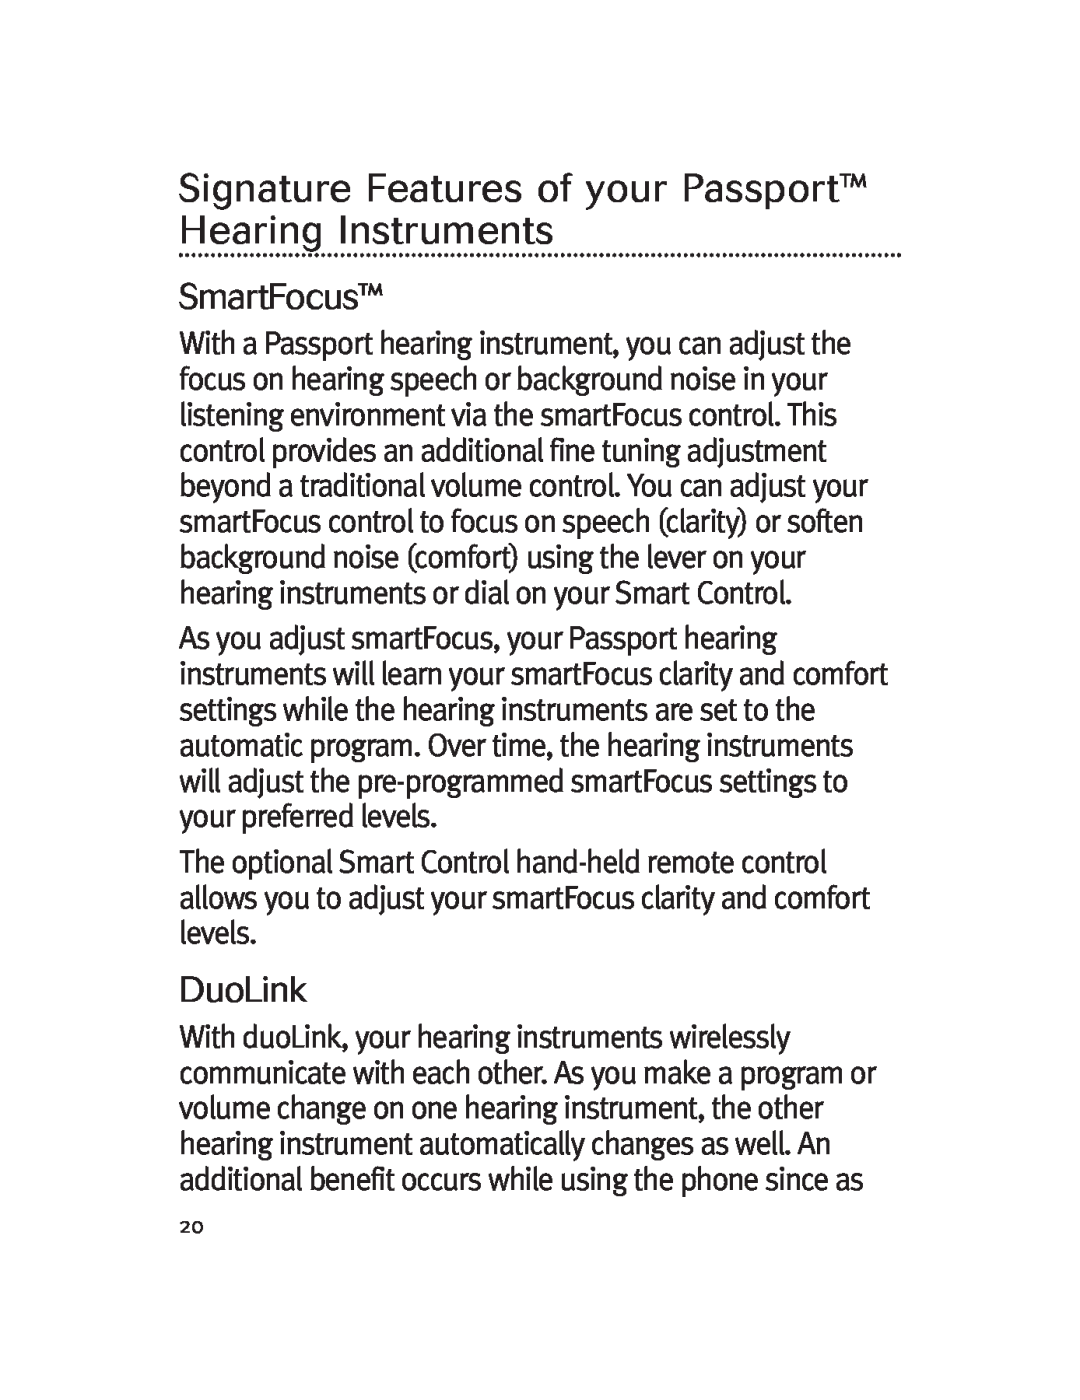 Unitron Hearing Aid Moxi 13, Moda 13 manual Signature Features of your Passport Hearing Instruments, SmartFocus, DuoLink 